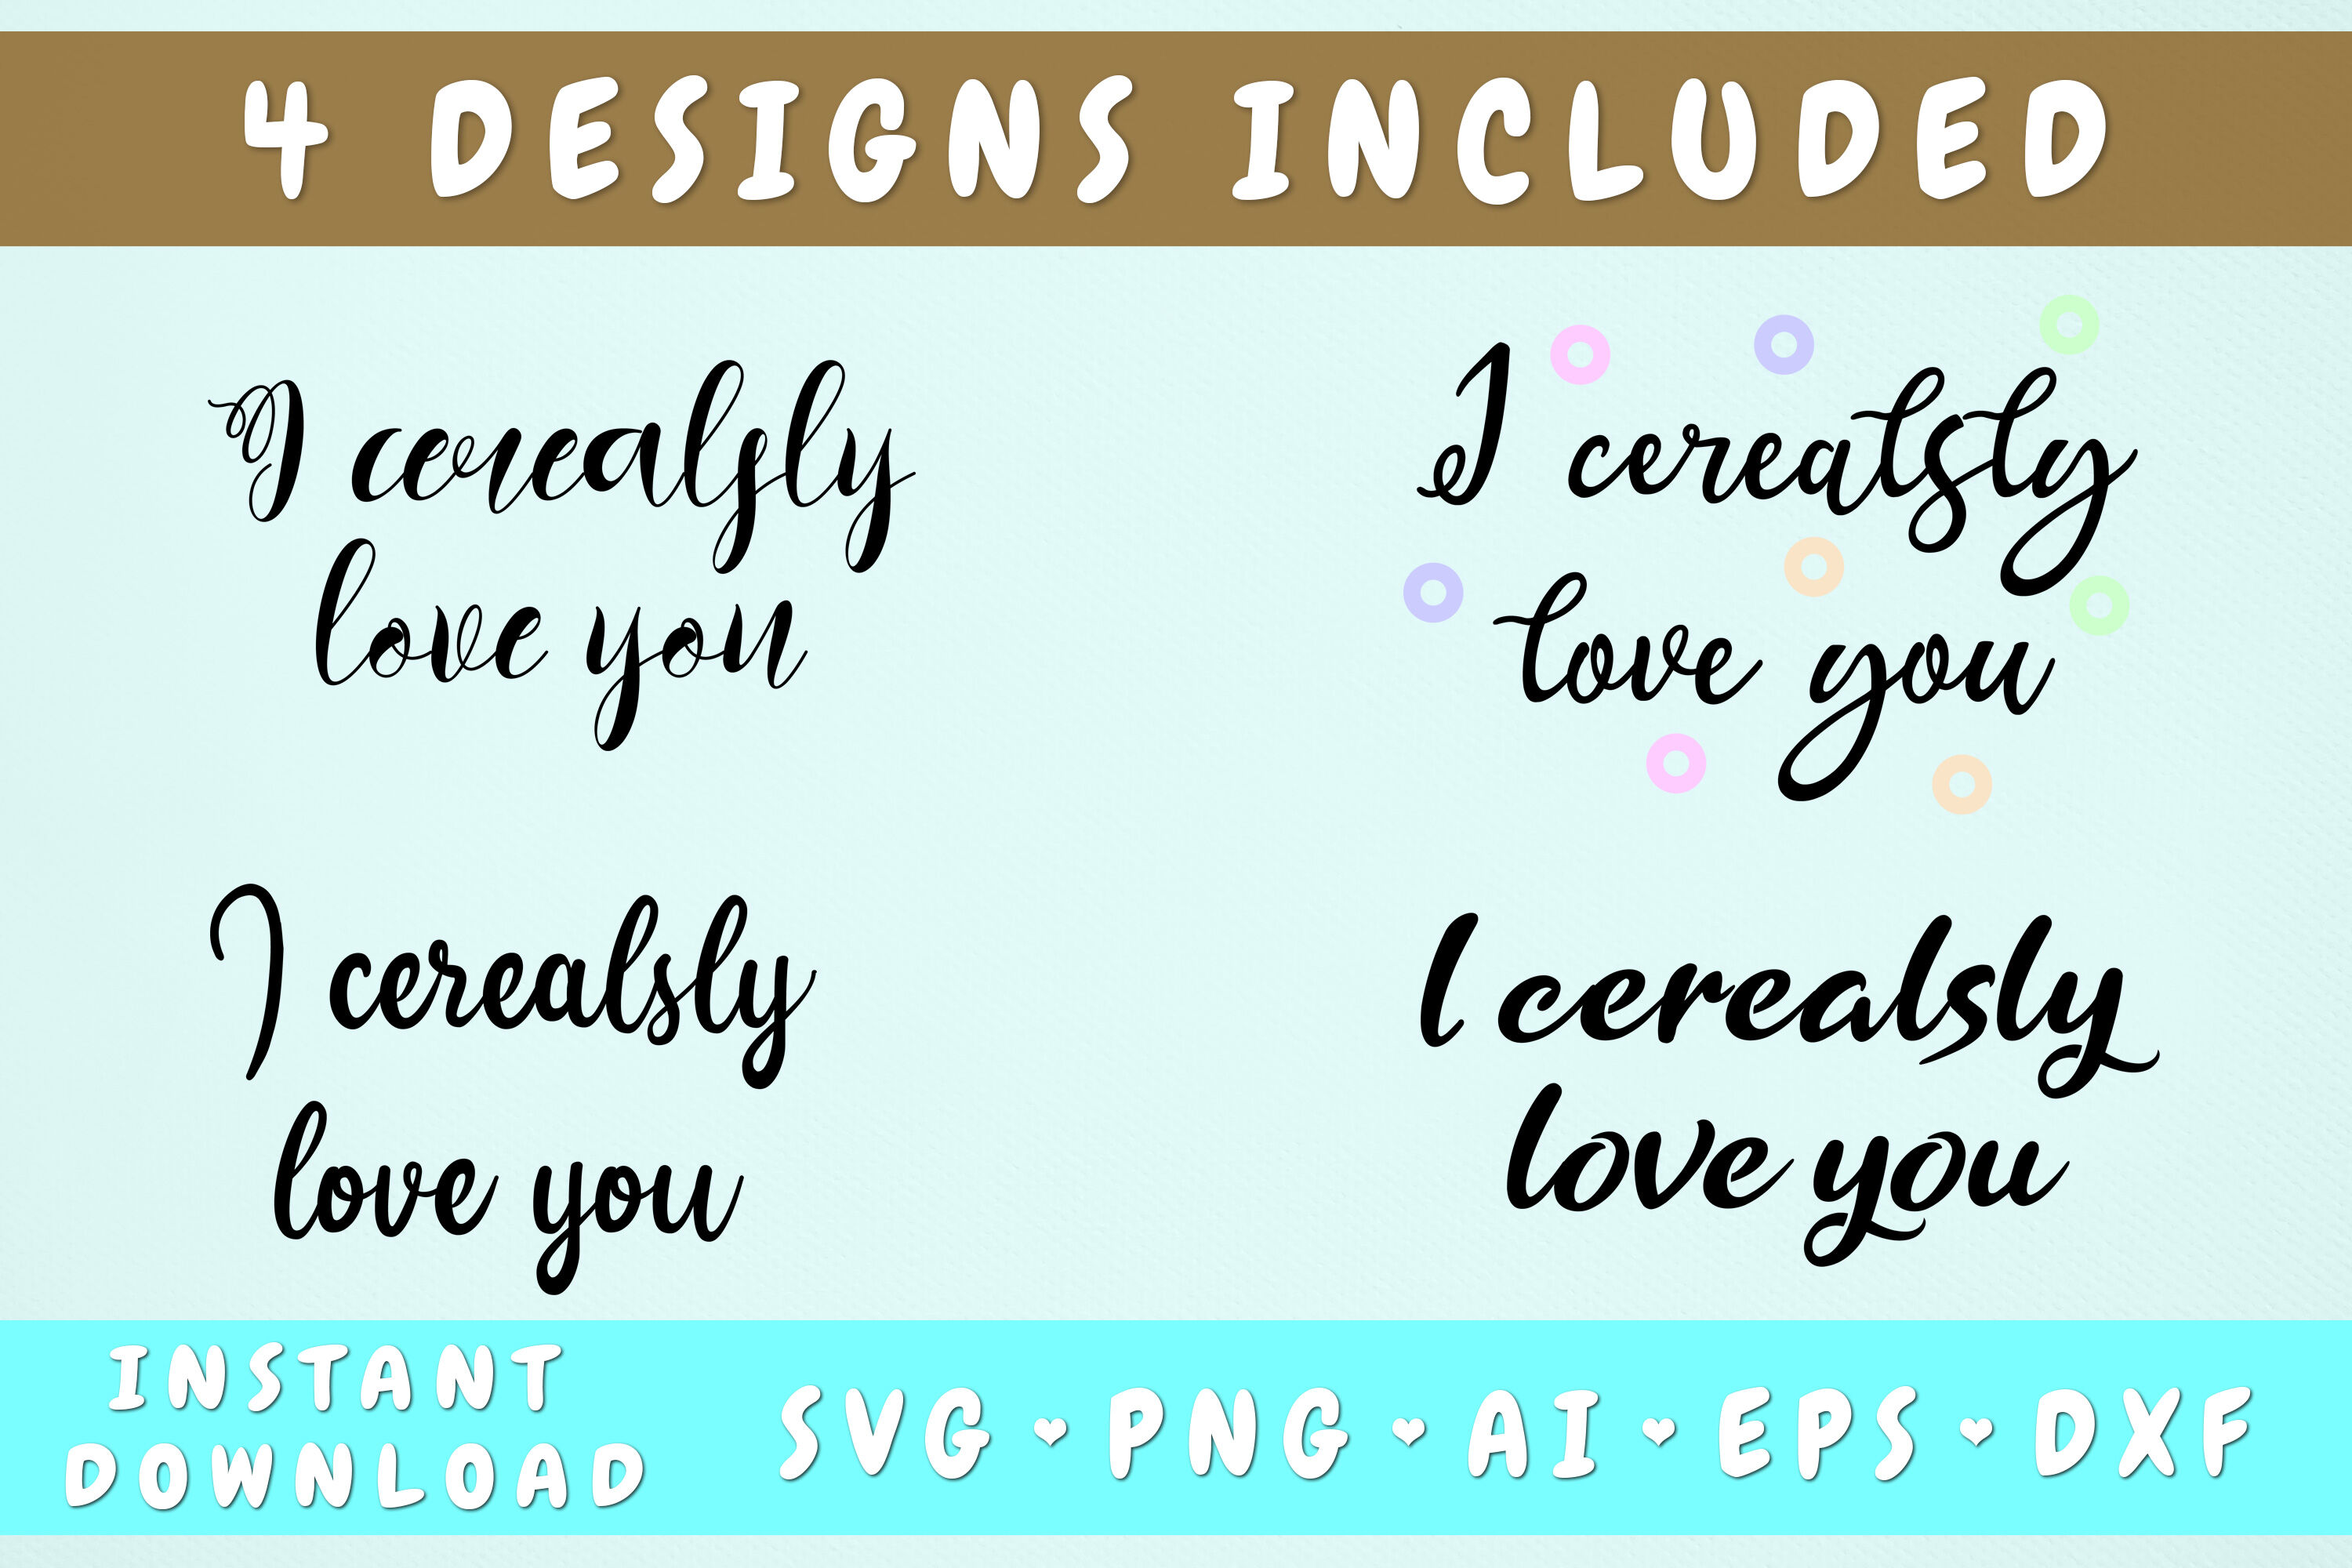 Download I Cerealsly Love You SVG - 4 Designs By ...